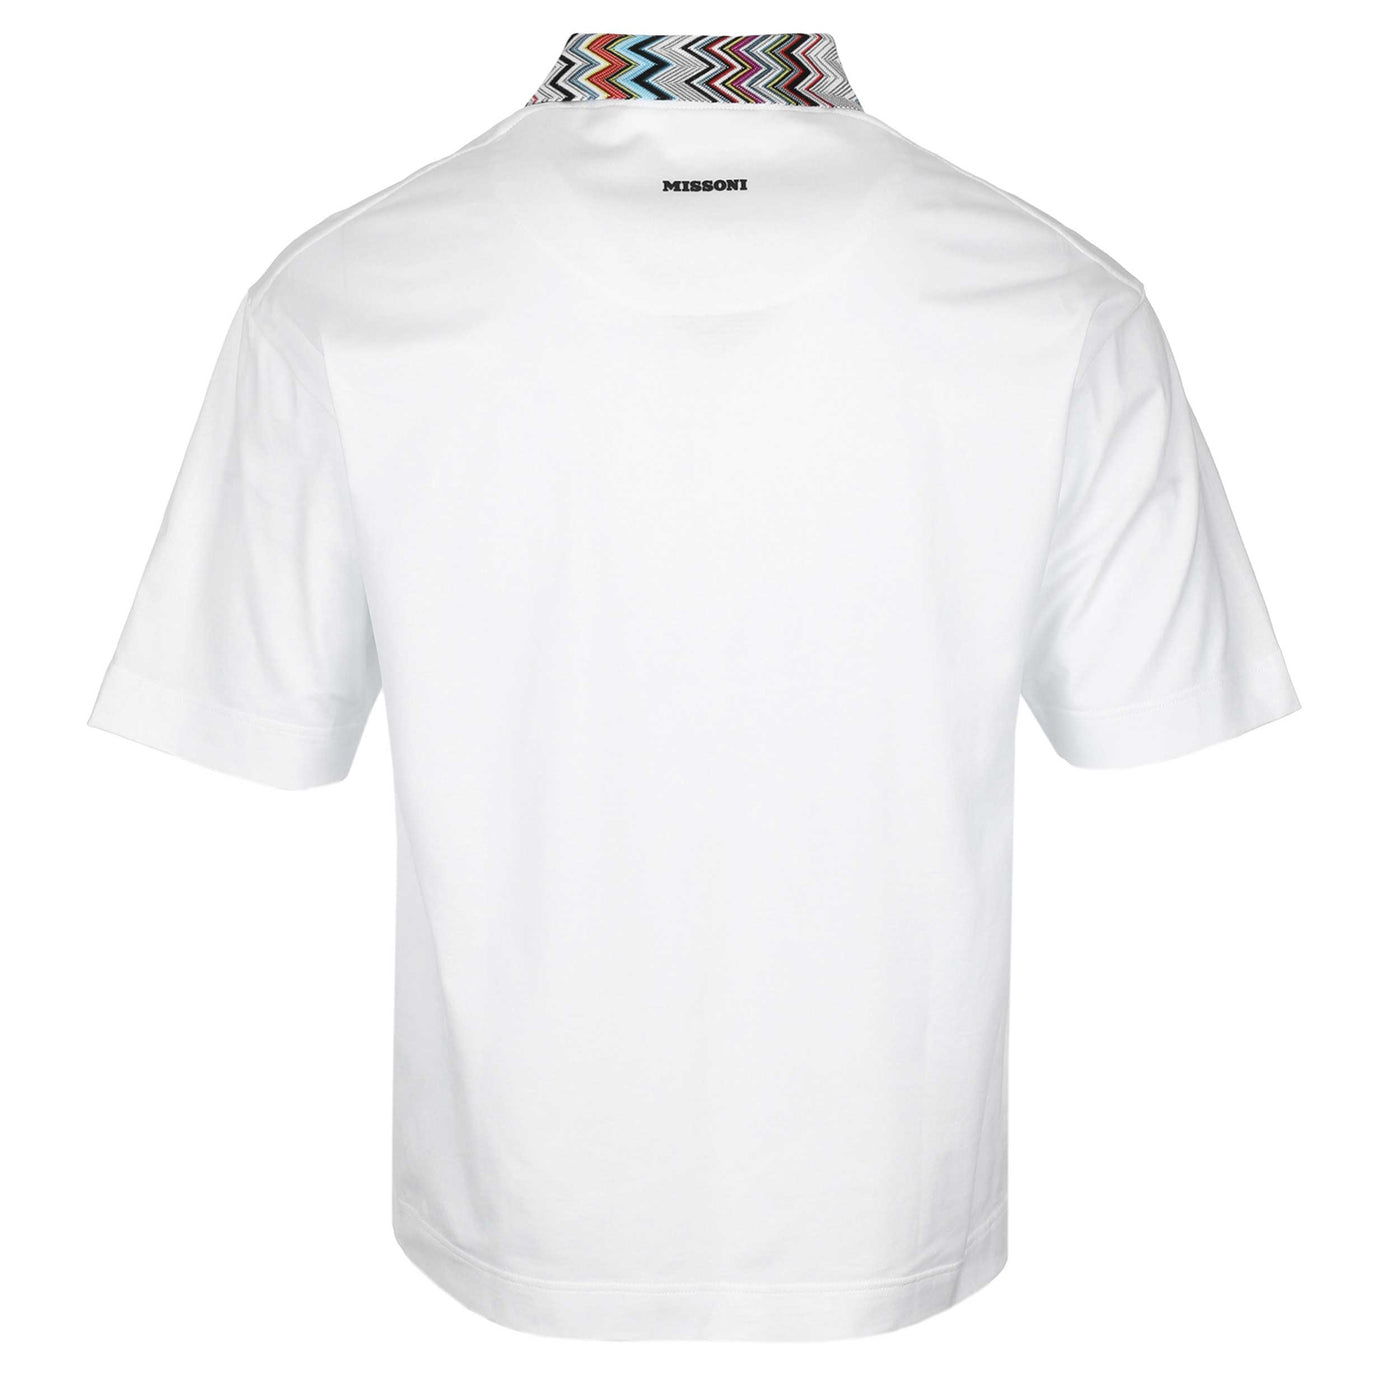 Missoni Zig Zag Collar Polo Shirt in White Back